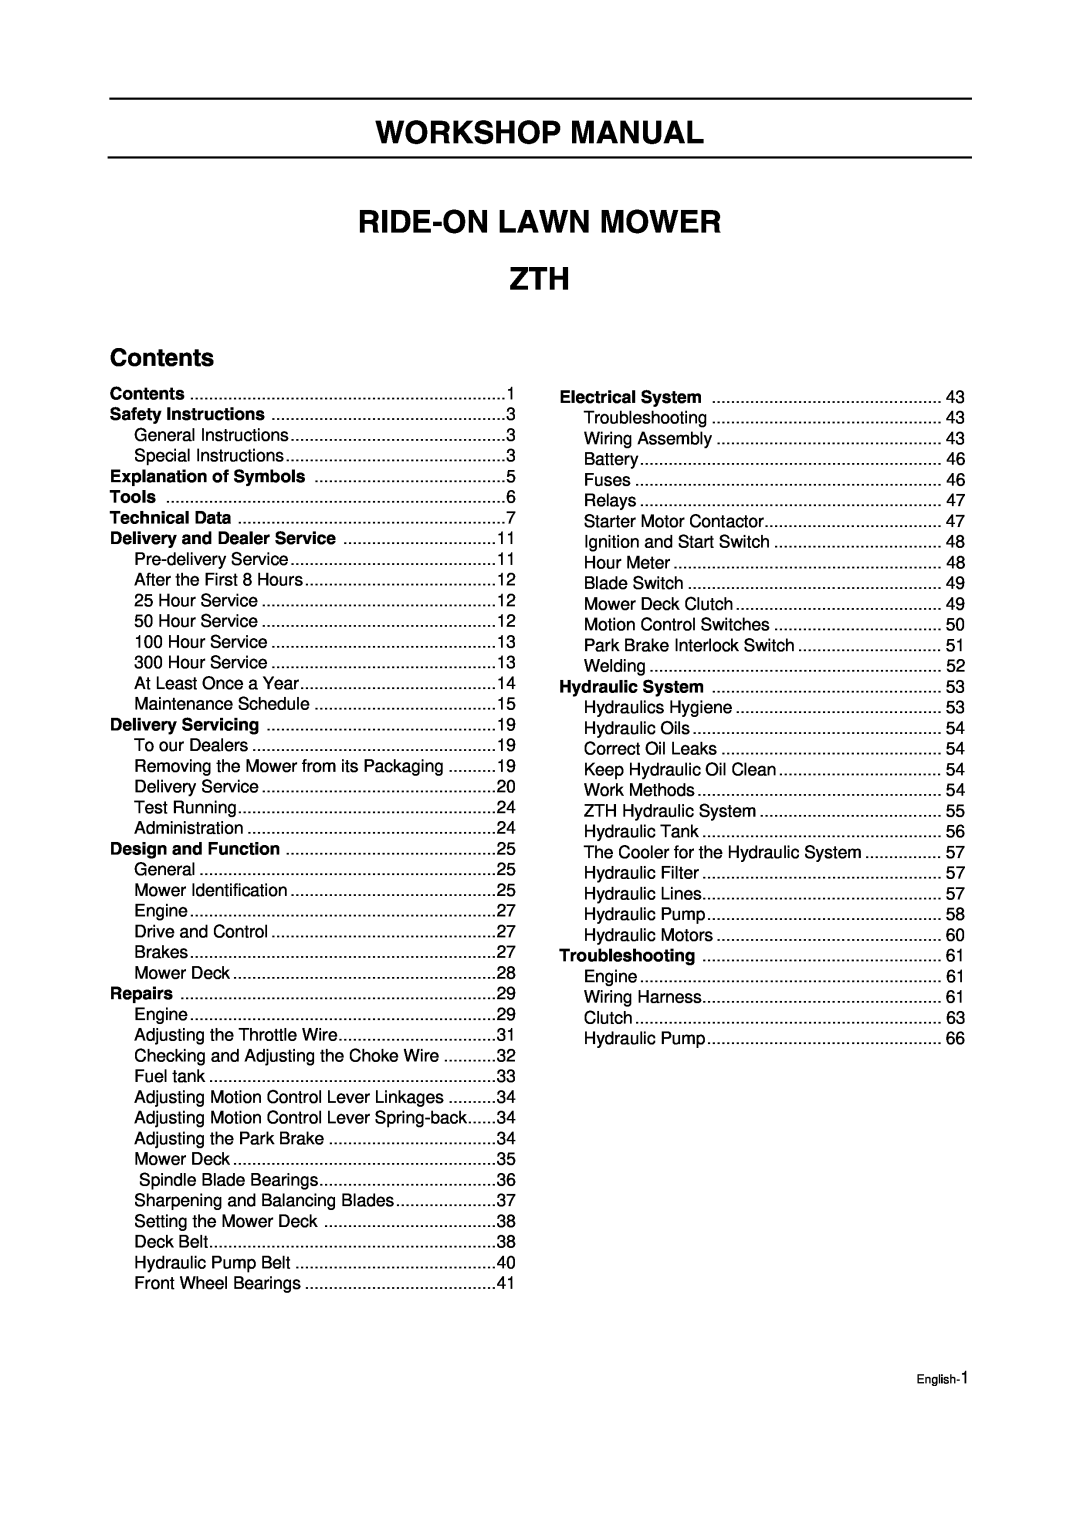 Husqvarna ZTH5223, ZTH6125 manual Workshop Manual, Ride-Onlawn Mower Zth, Contents 